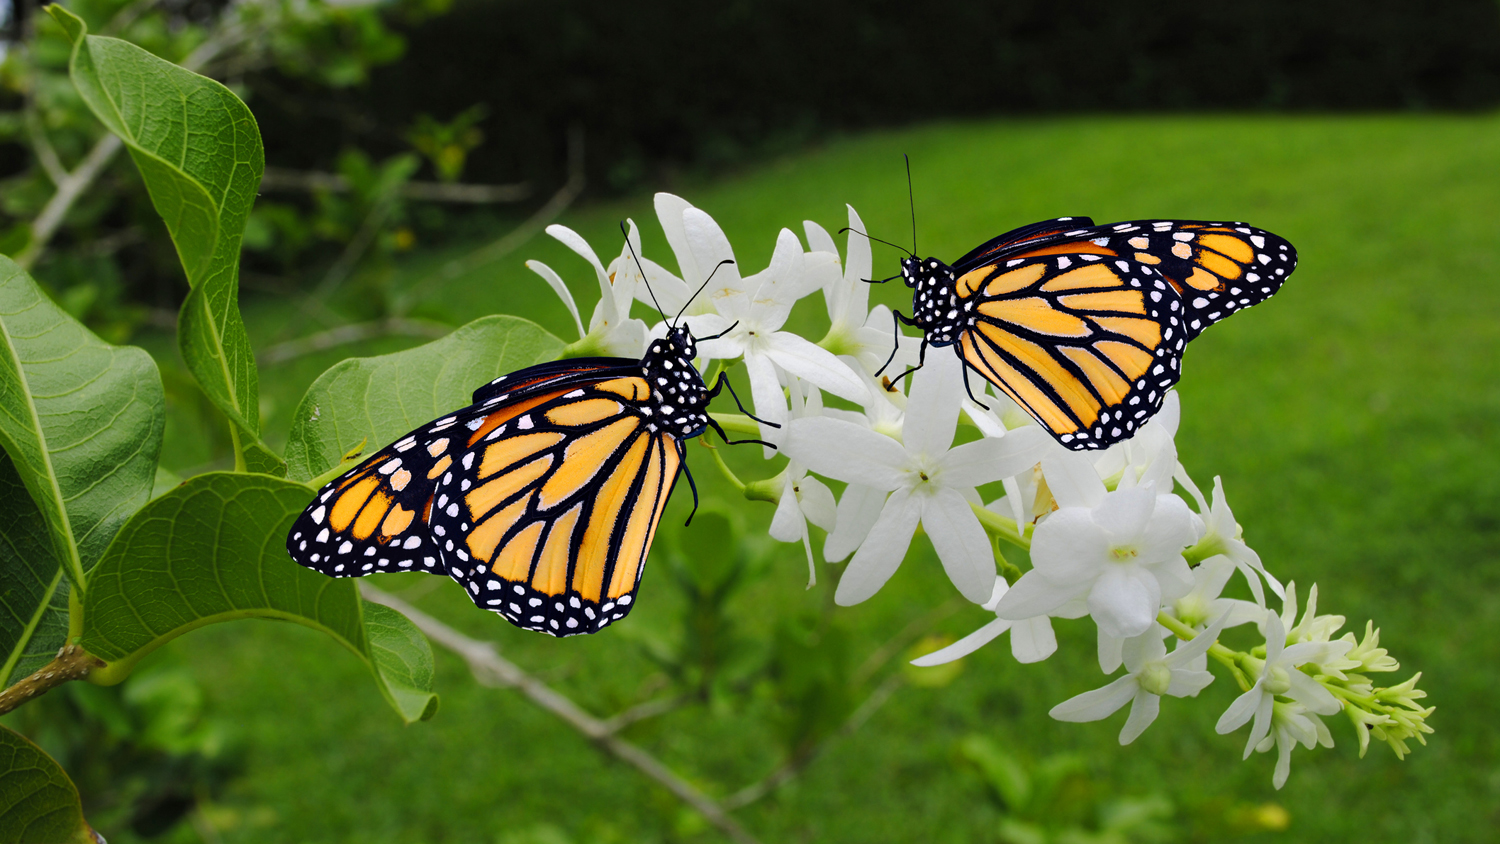 Two Monarch butterflies Latin name Danaus plexippus on a white flower